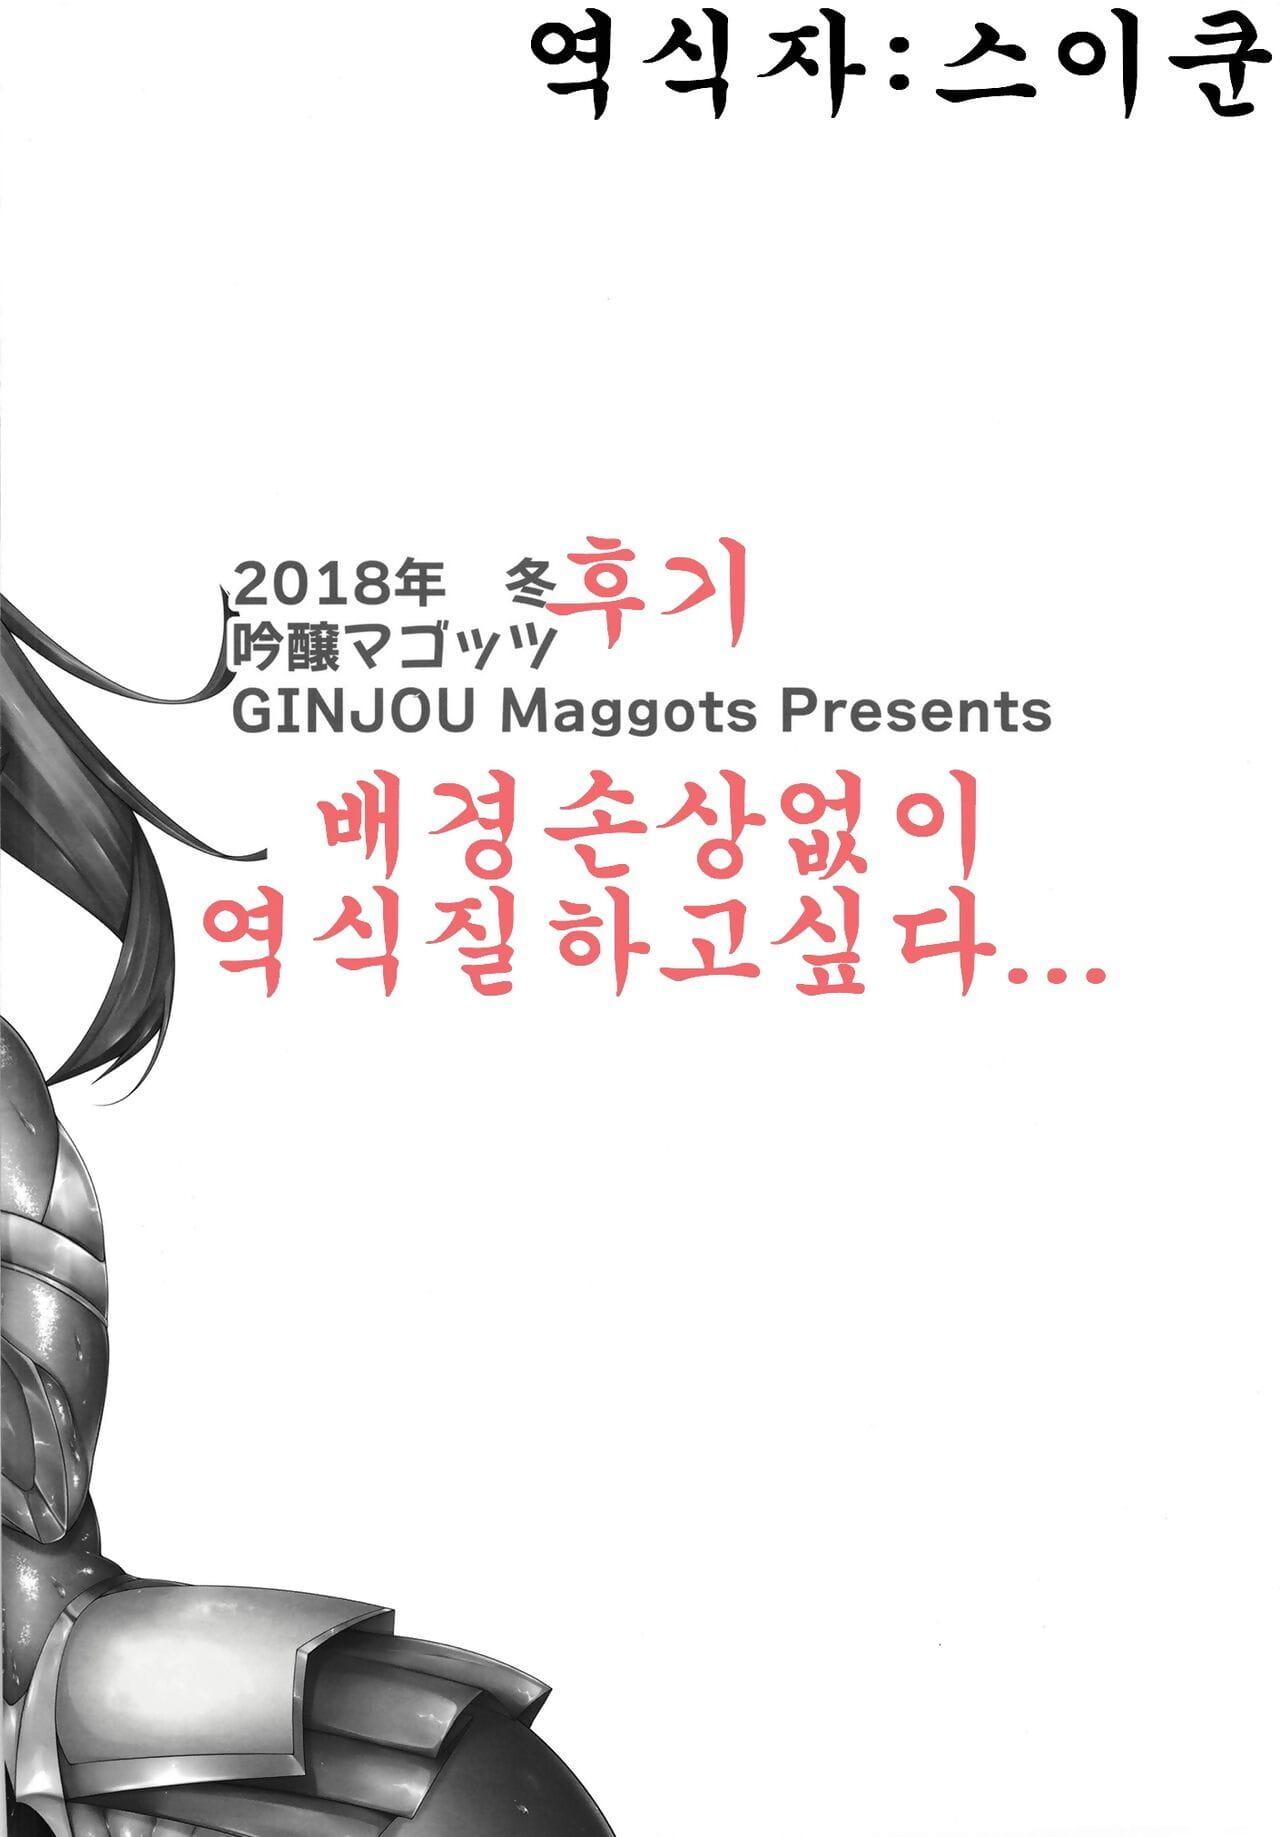 Ginjou Maden Kurotama 2018 muchimuchi oniku chan matome +α 2018포동포동 고기집 모음 verschiedene Koreanisch 스이쿤 digital